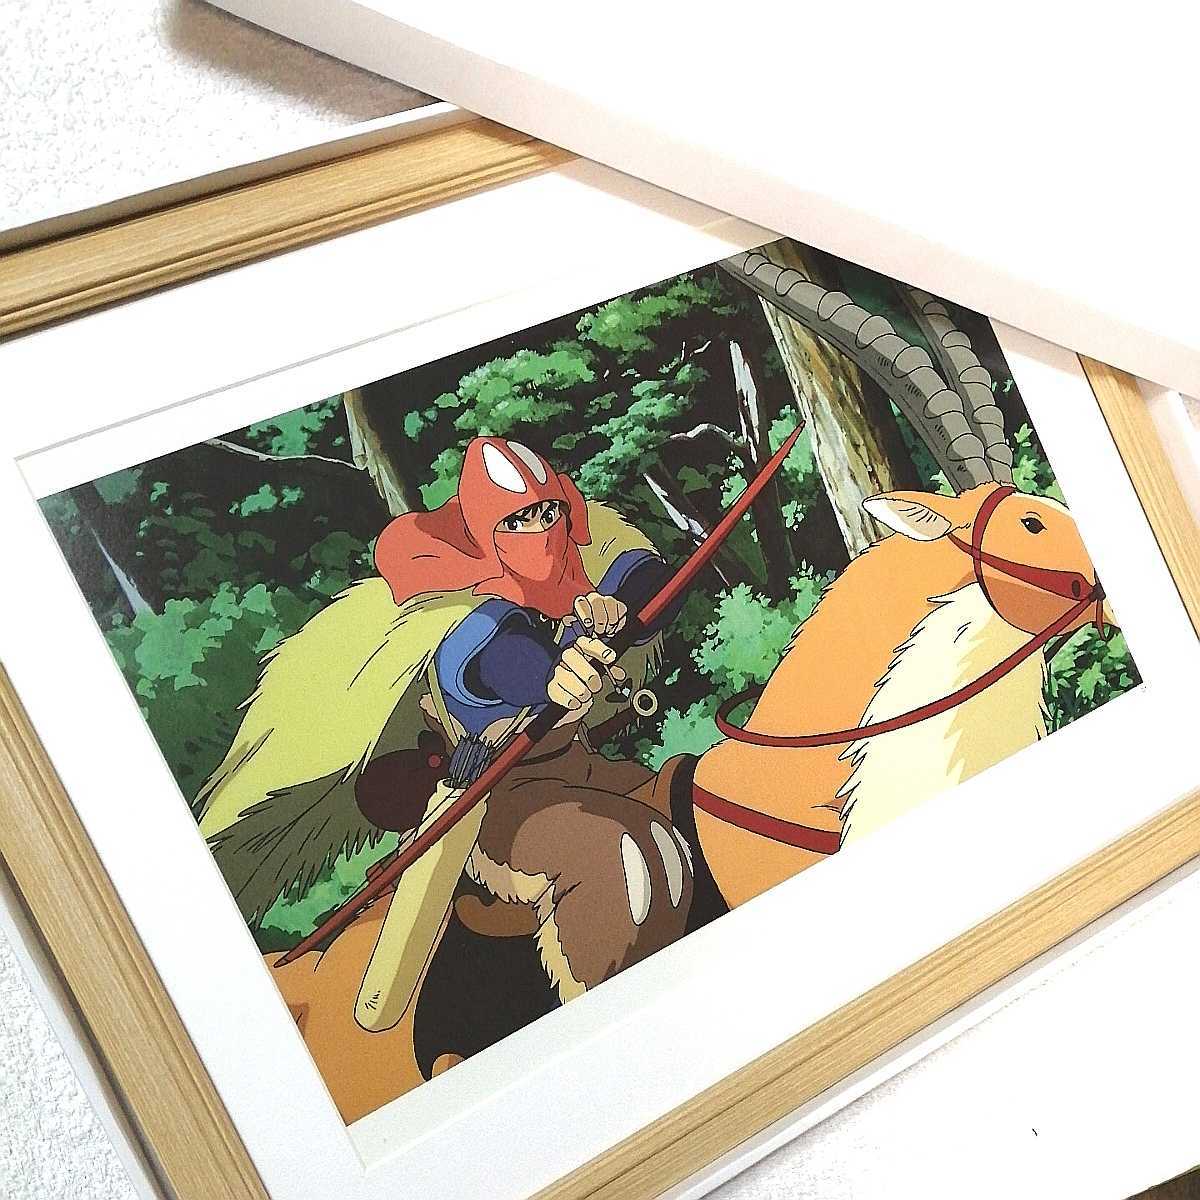 Super selten! Studio Ghibli Prinzessin Mononoke [gerahmter Artikel] Ghibli Poster, Ghibli-Kalender, Ghibli-Gemälde, Originalreproduktion, Postkarte. Hayao Miyazaki, Meine Reihe, Prinzessin Mononoke, Andere